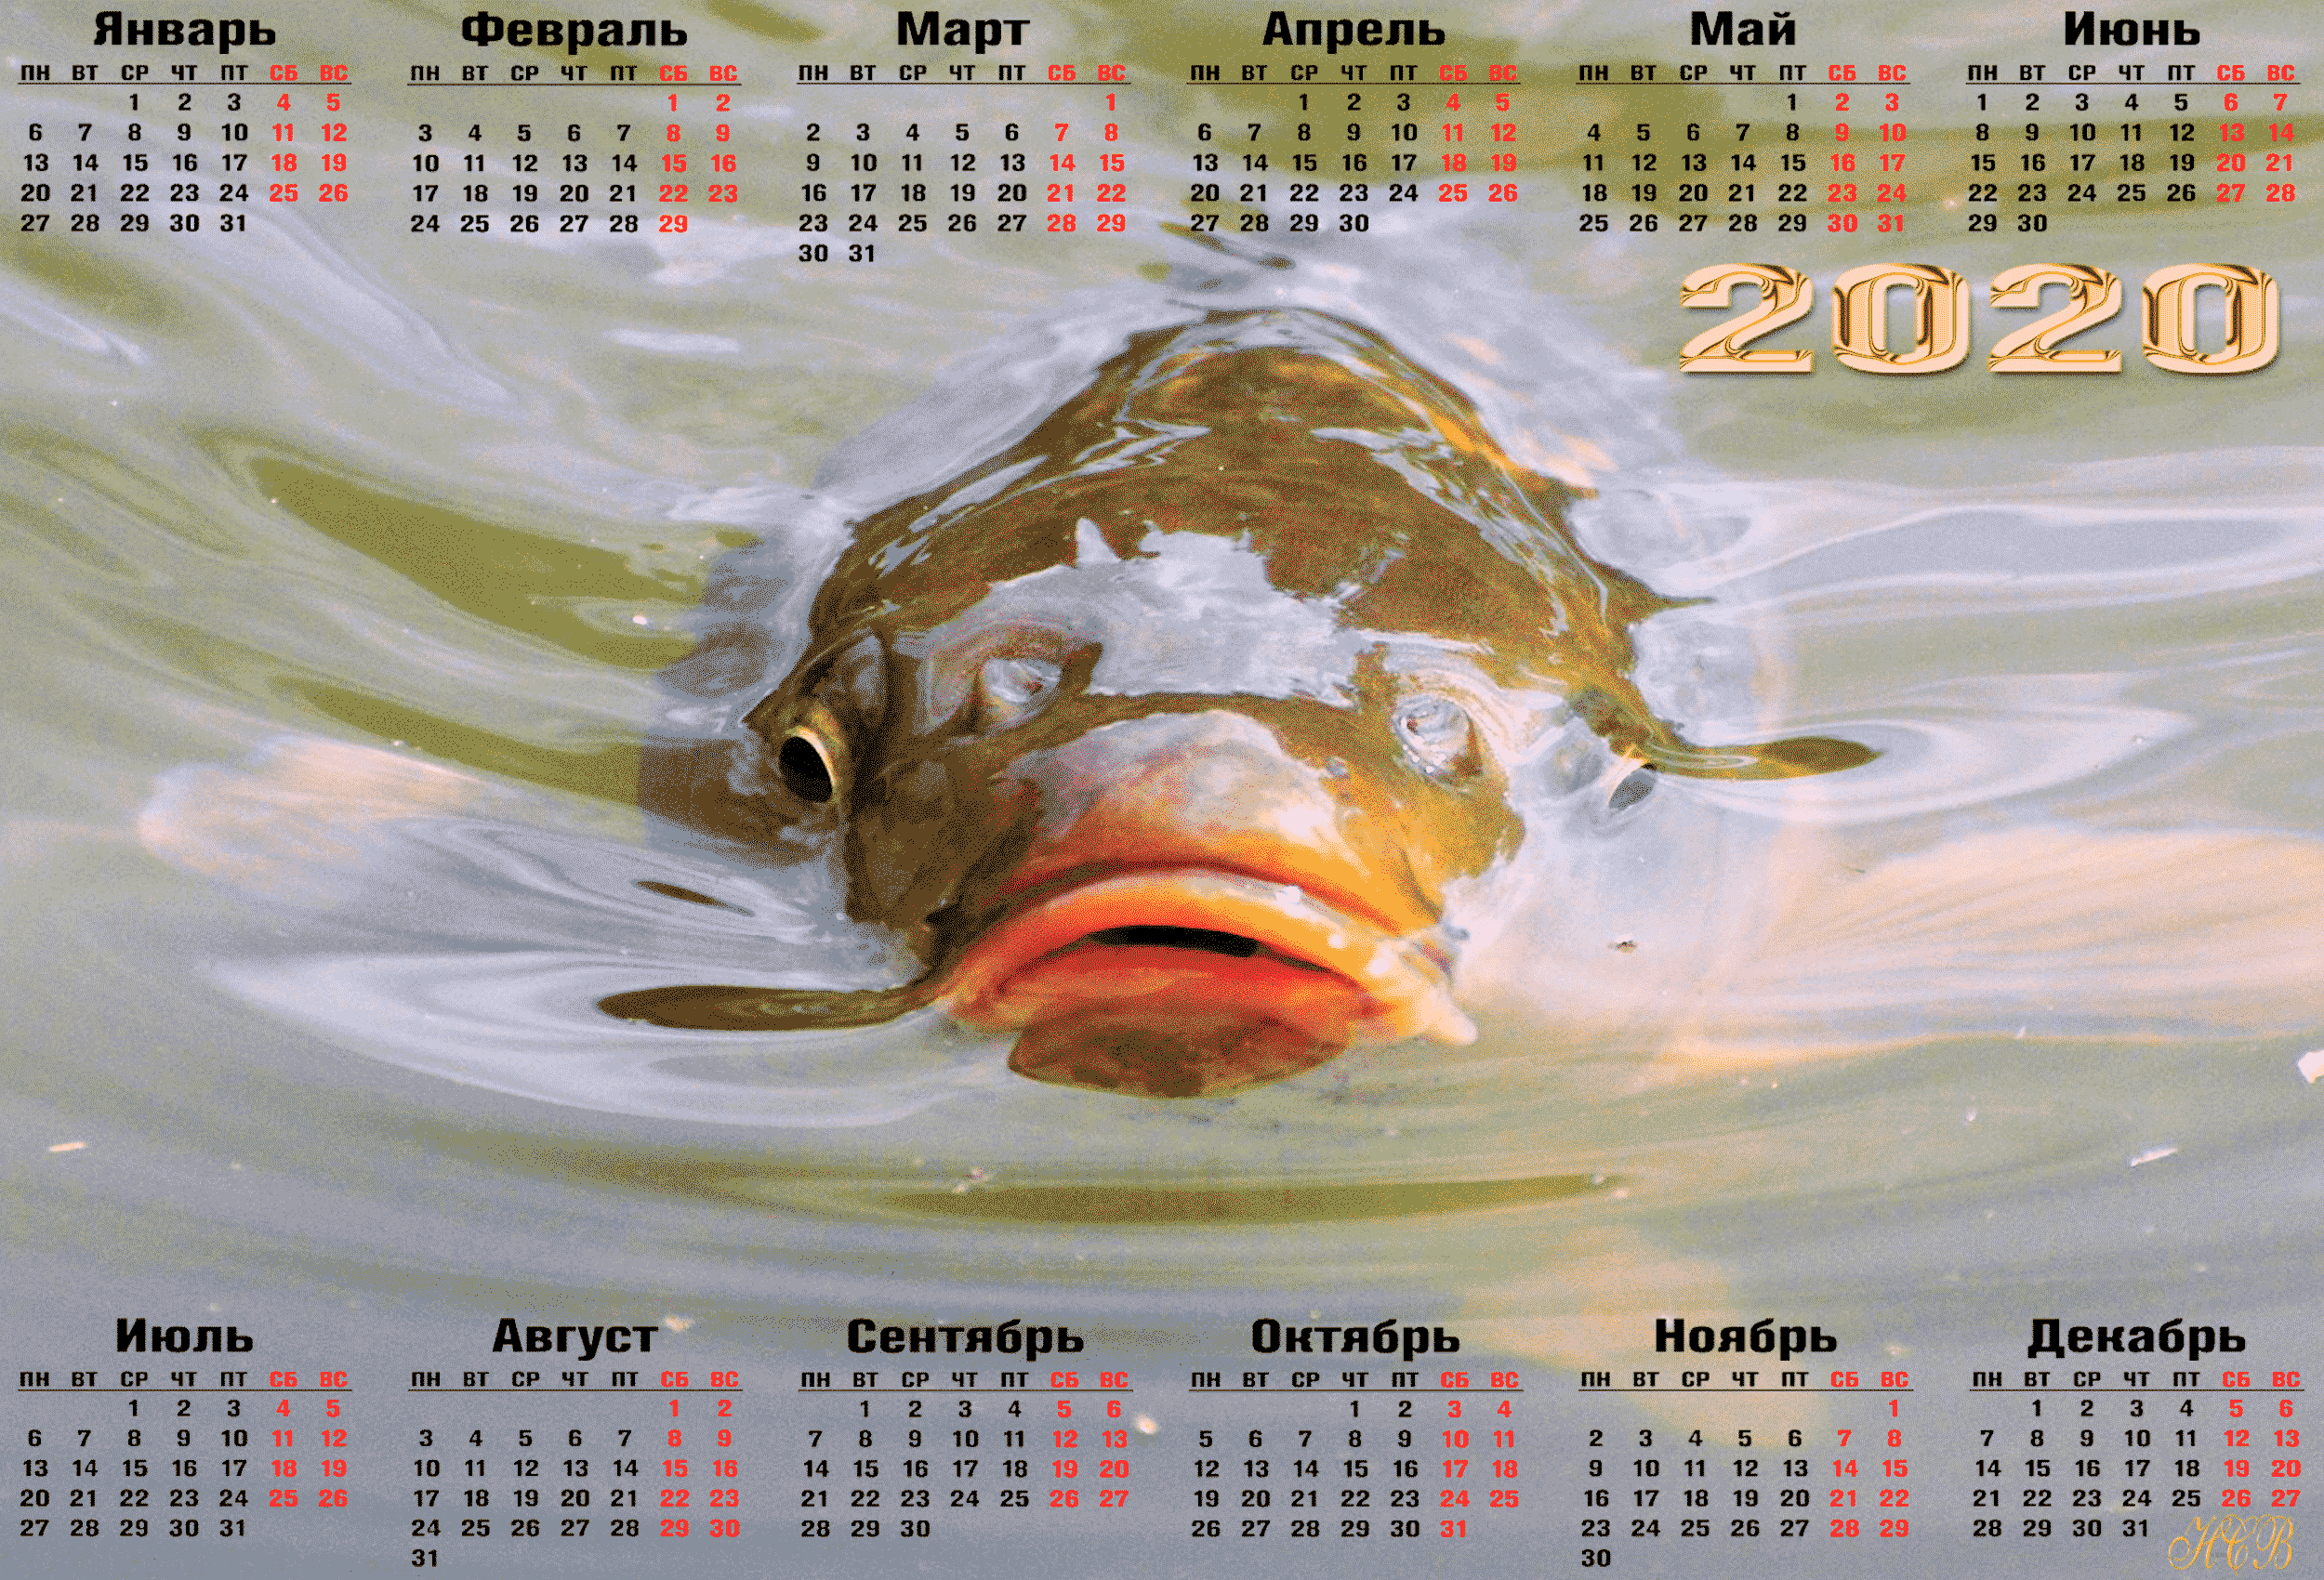 Рыболовный календарь 2020